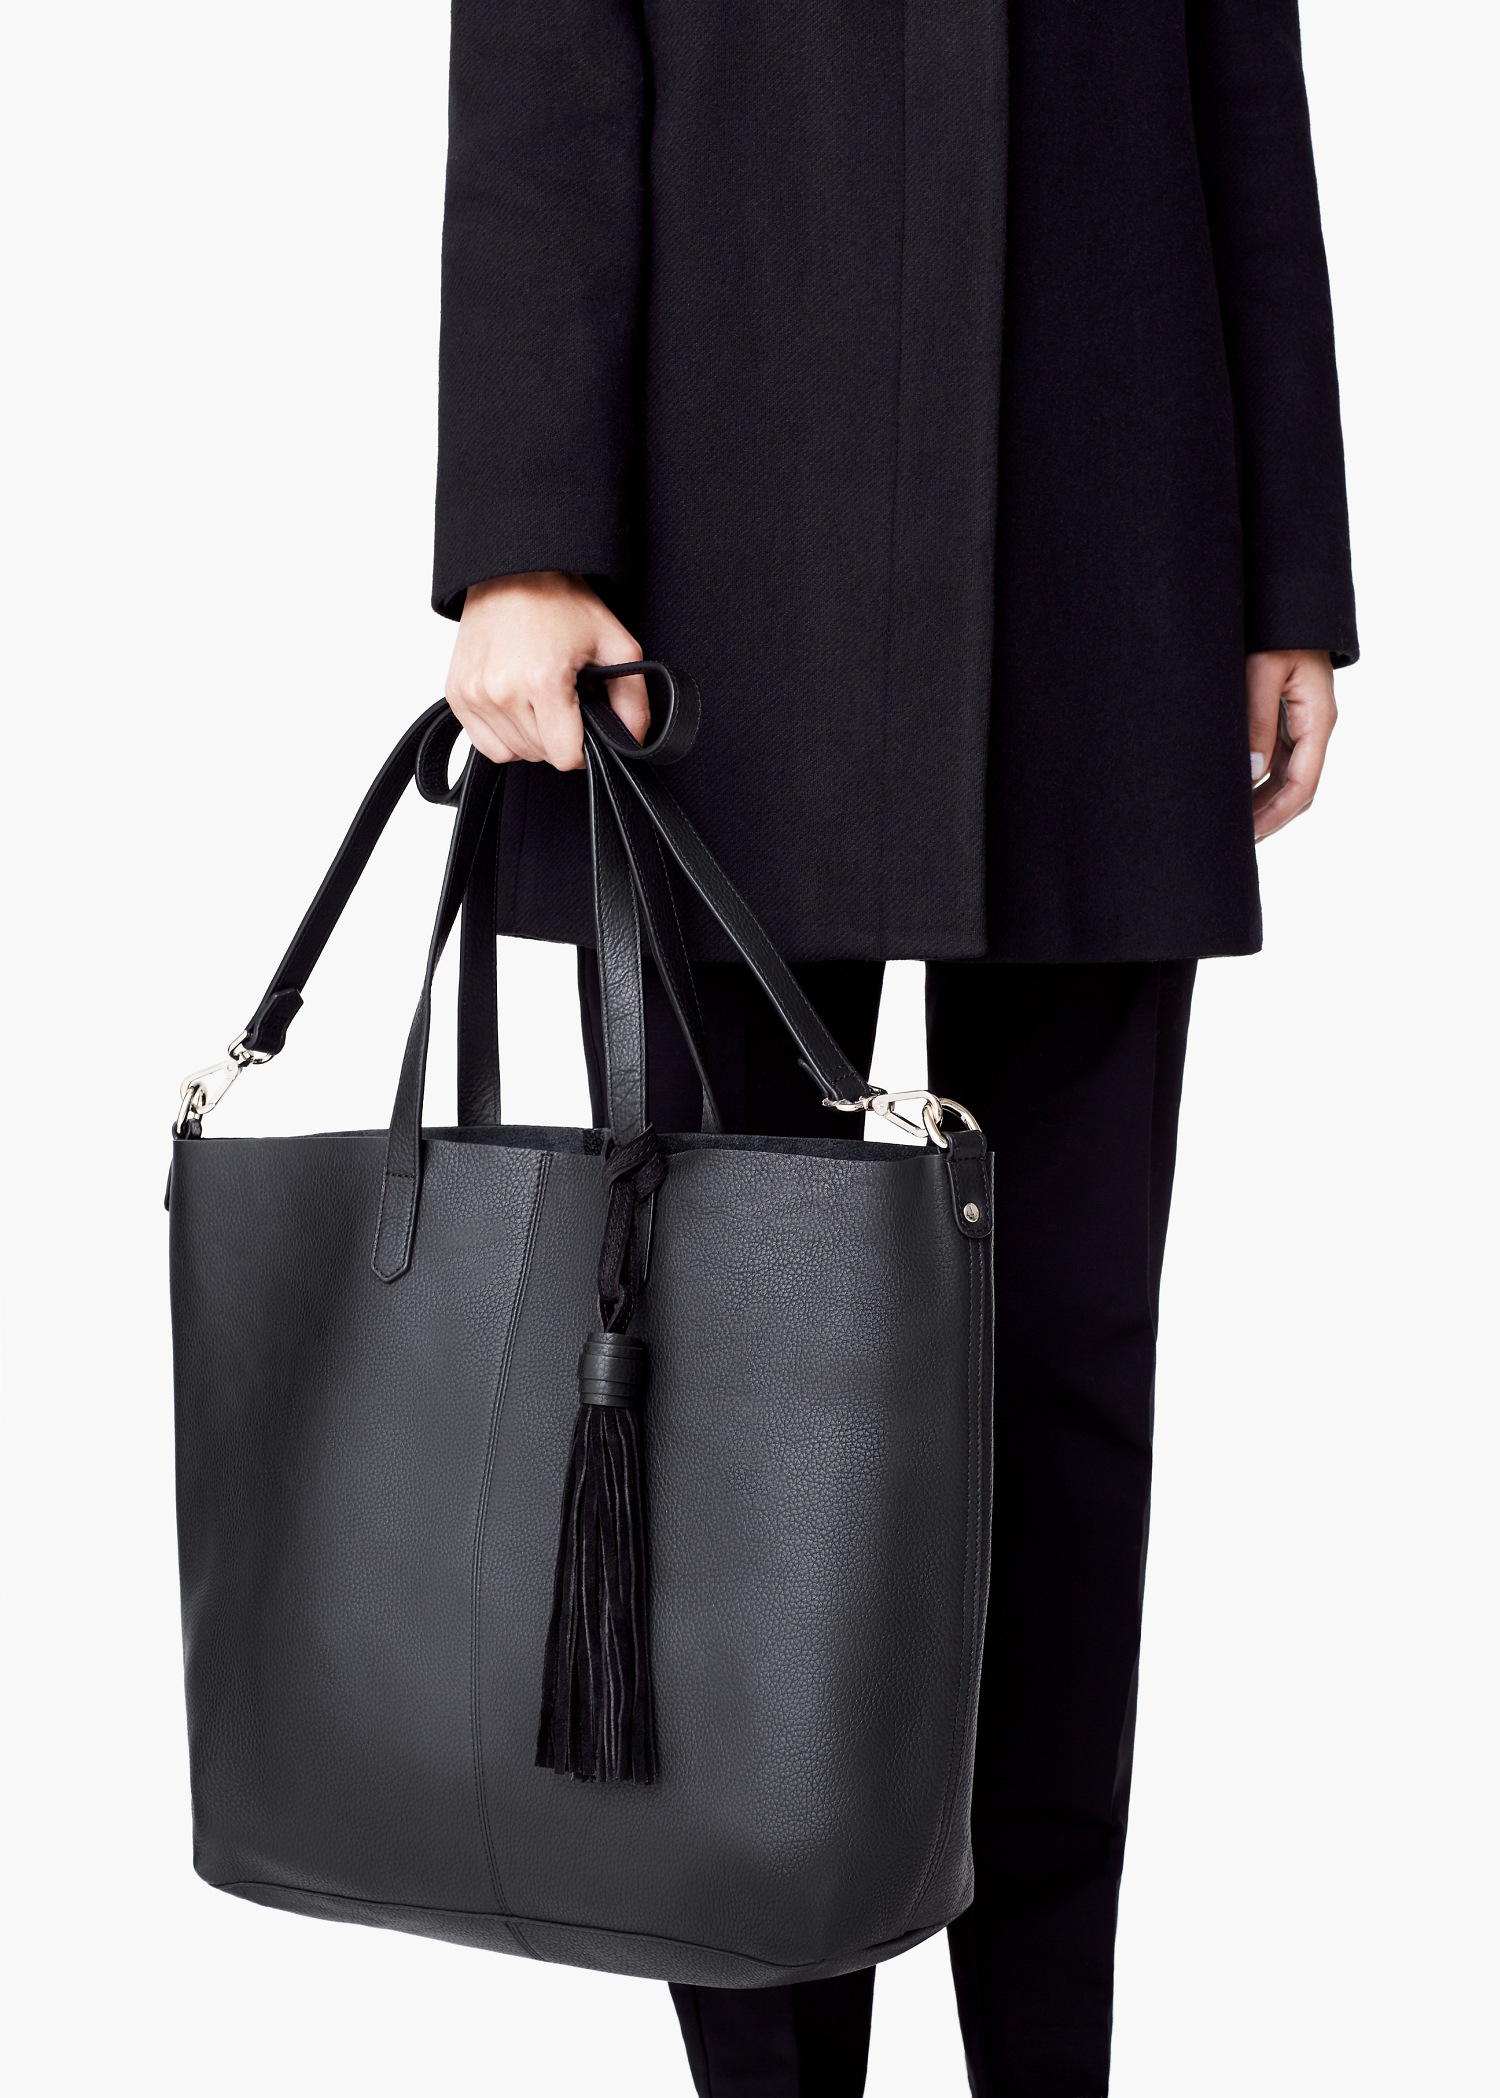 Mango Faux-leather Shopper Bag in Black - Lyst